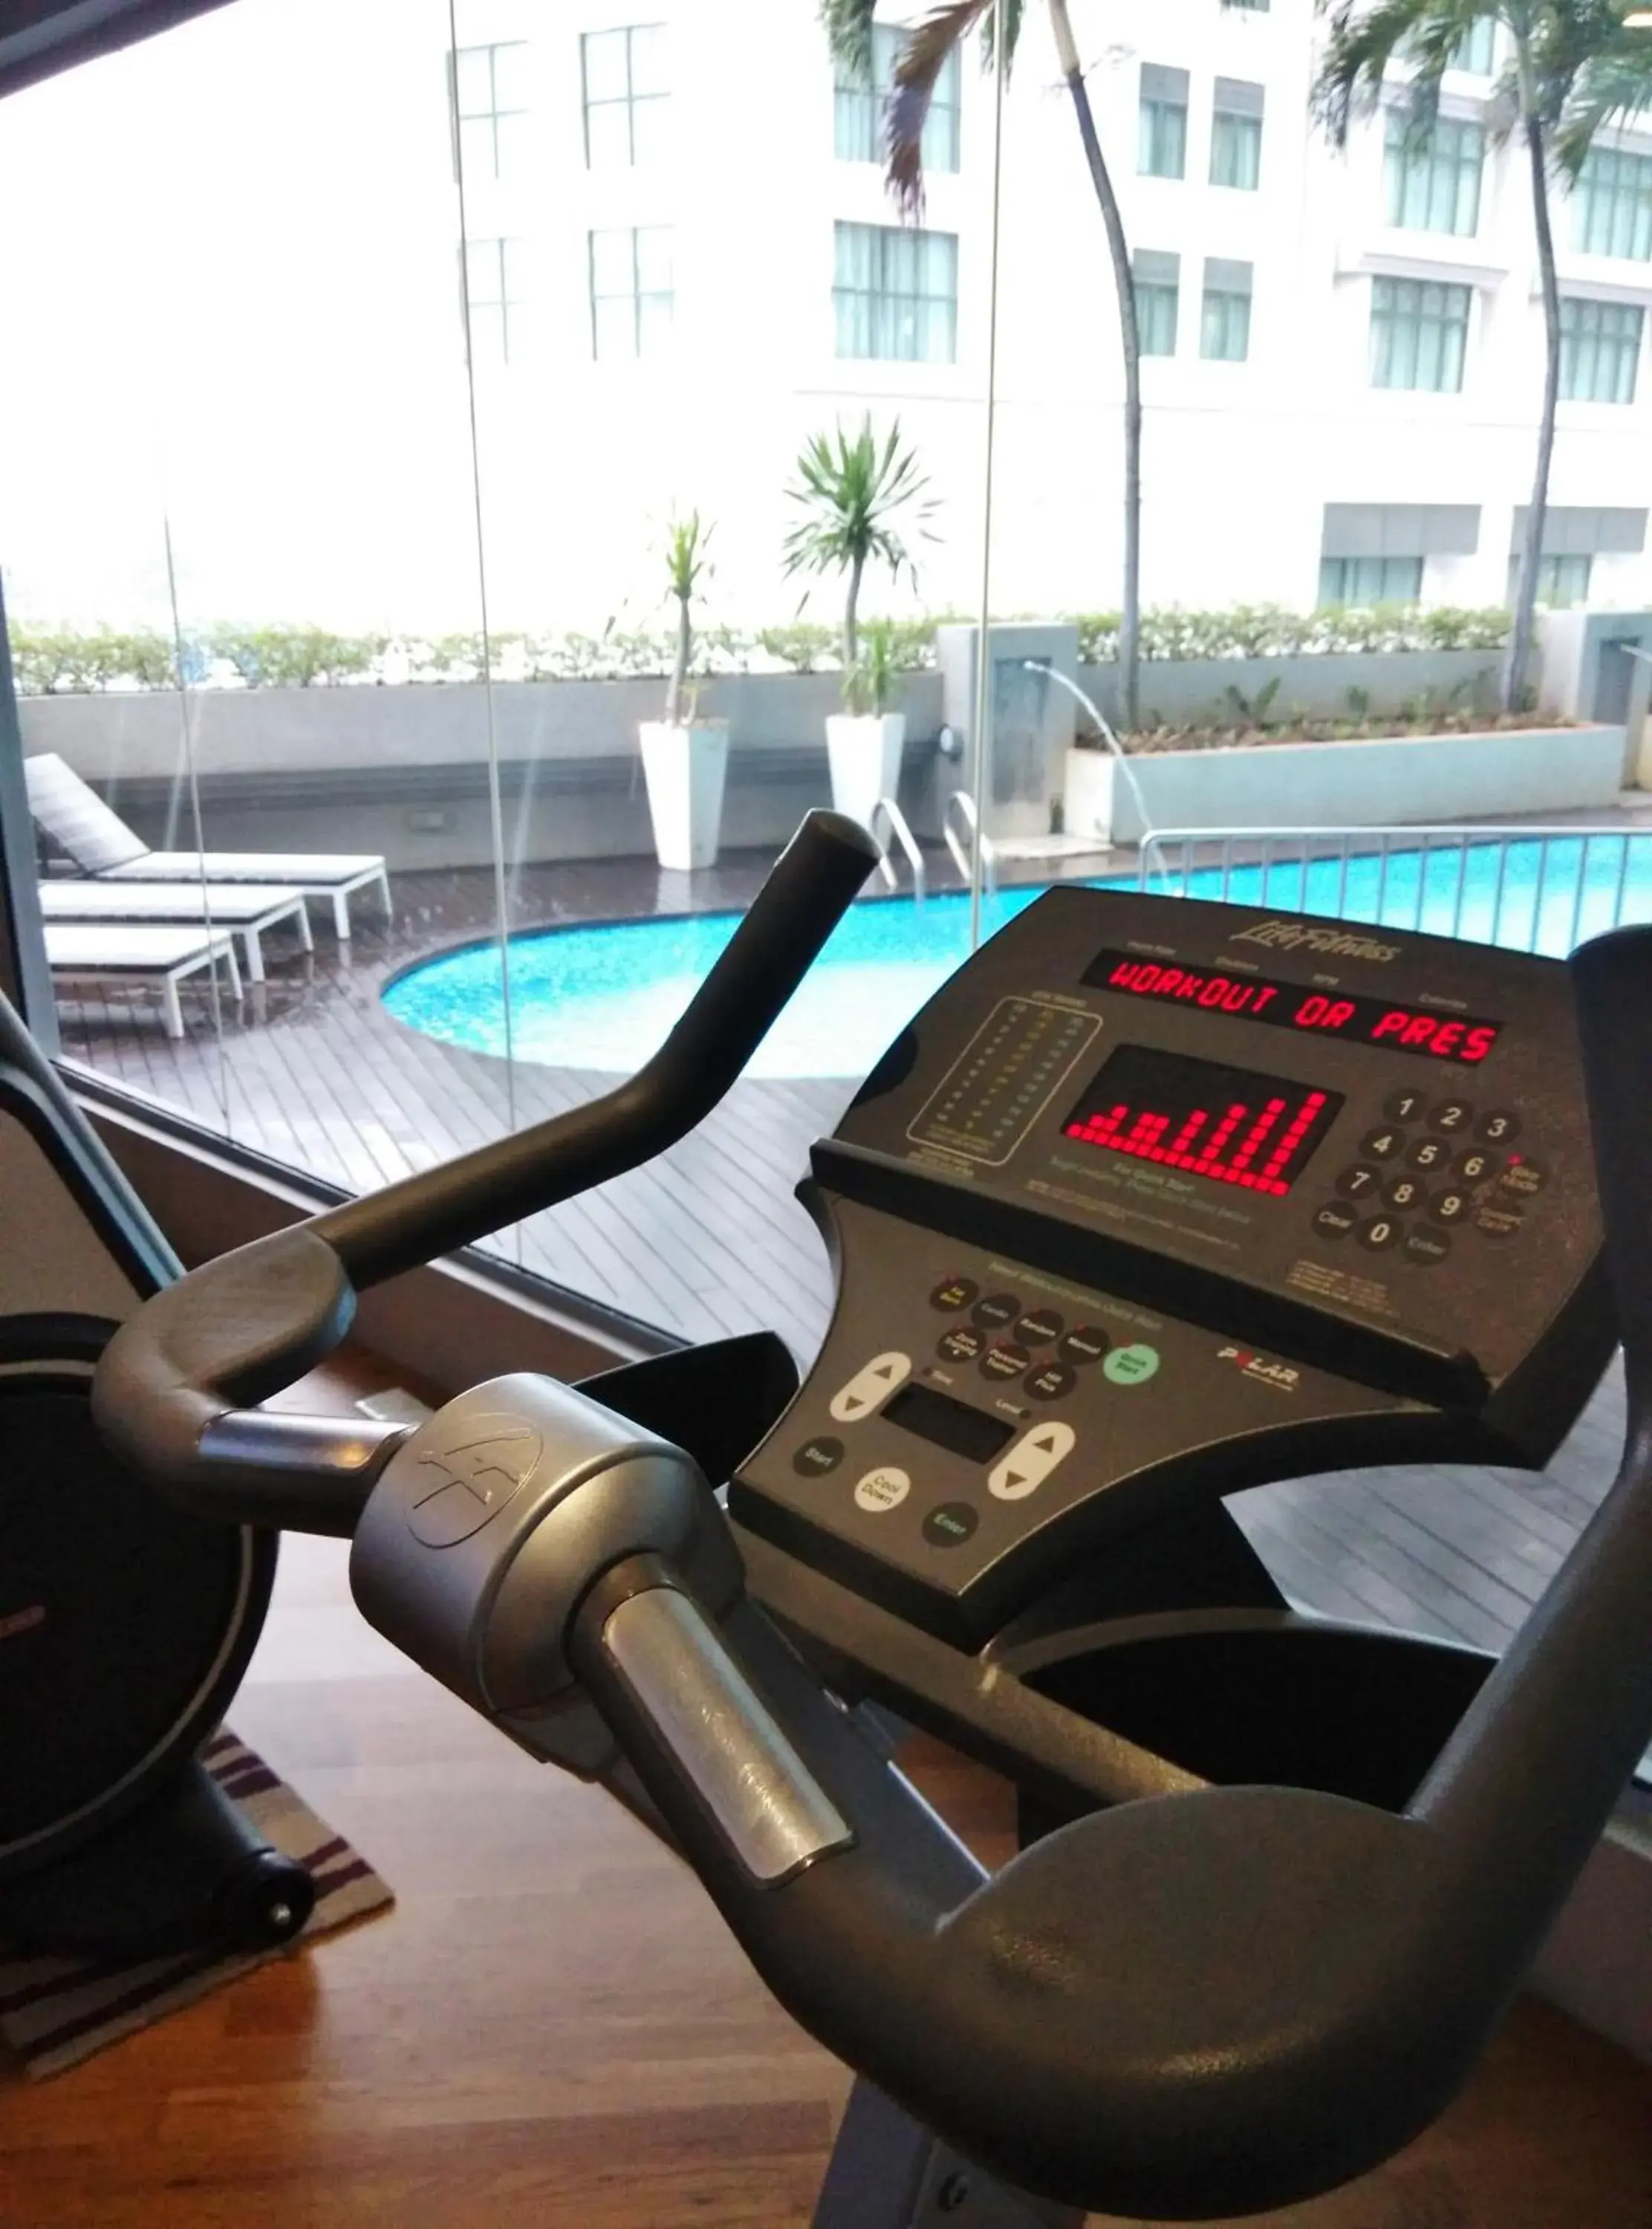 Fitness centre/facilities, Fitness Center/Facilities in Dorsett Kuala Lumpur